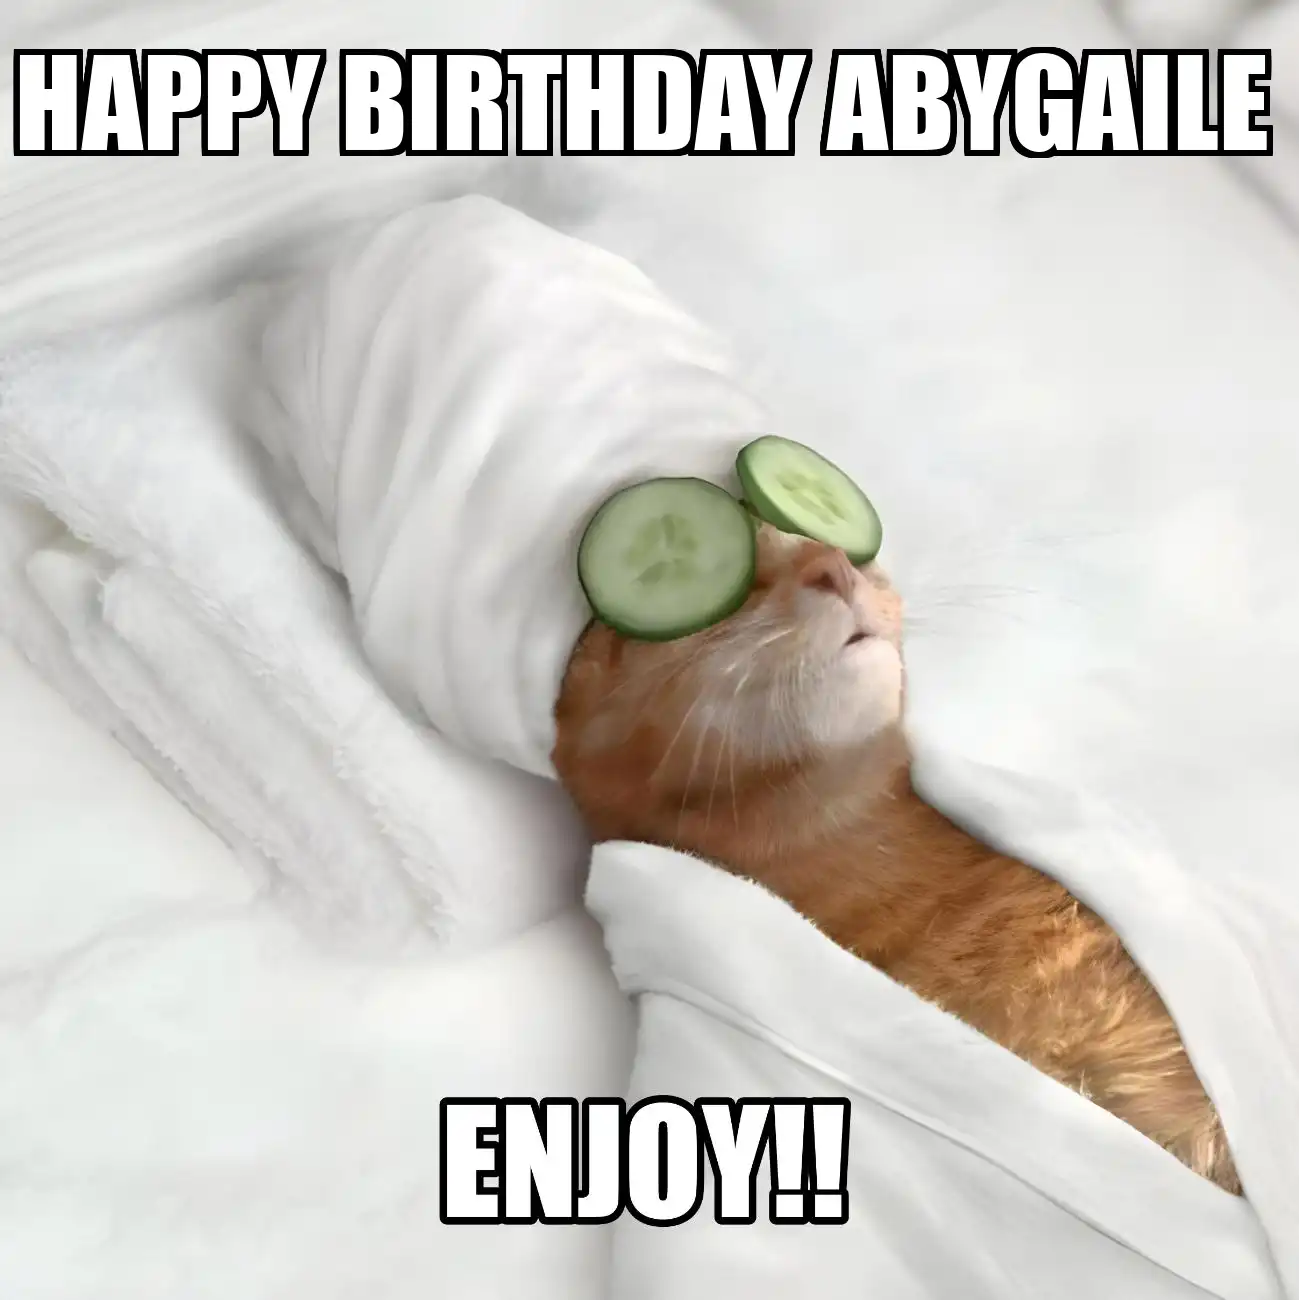 Happy Birthday Abygaile Enjoy Cat Meme